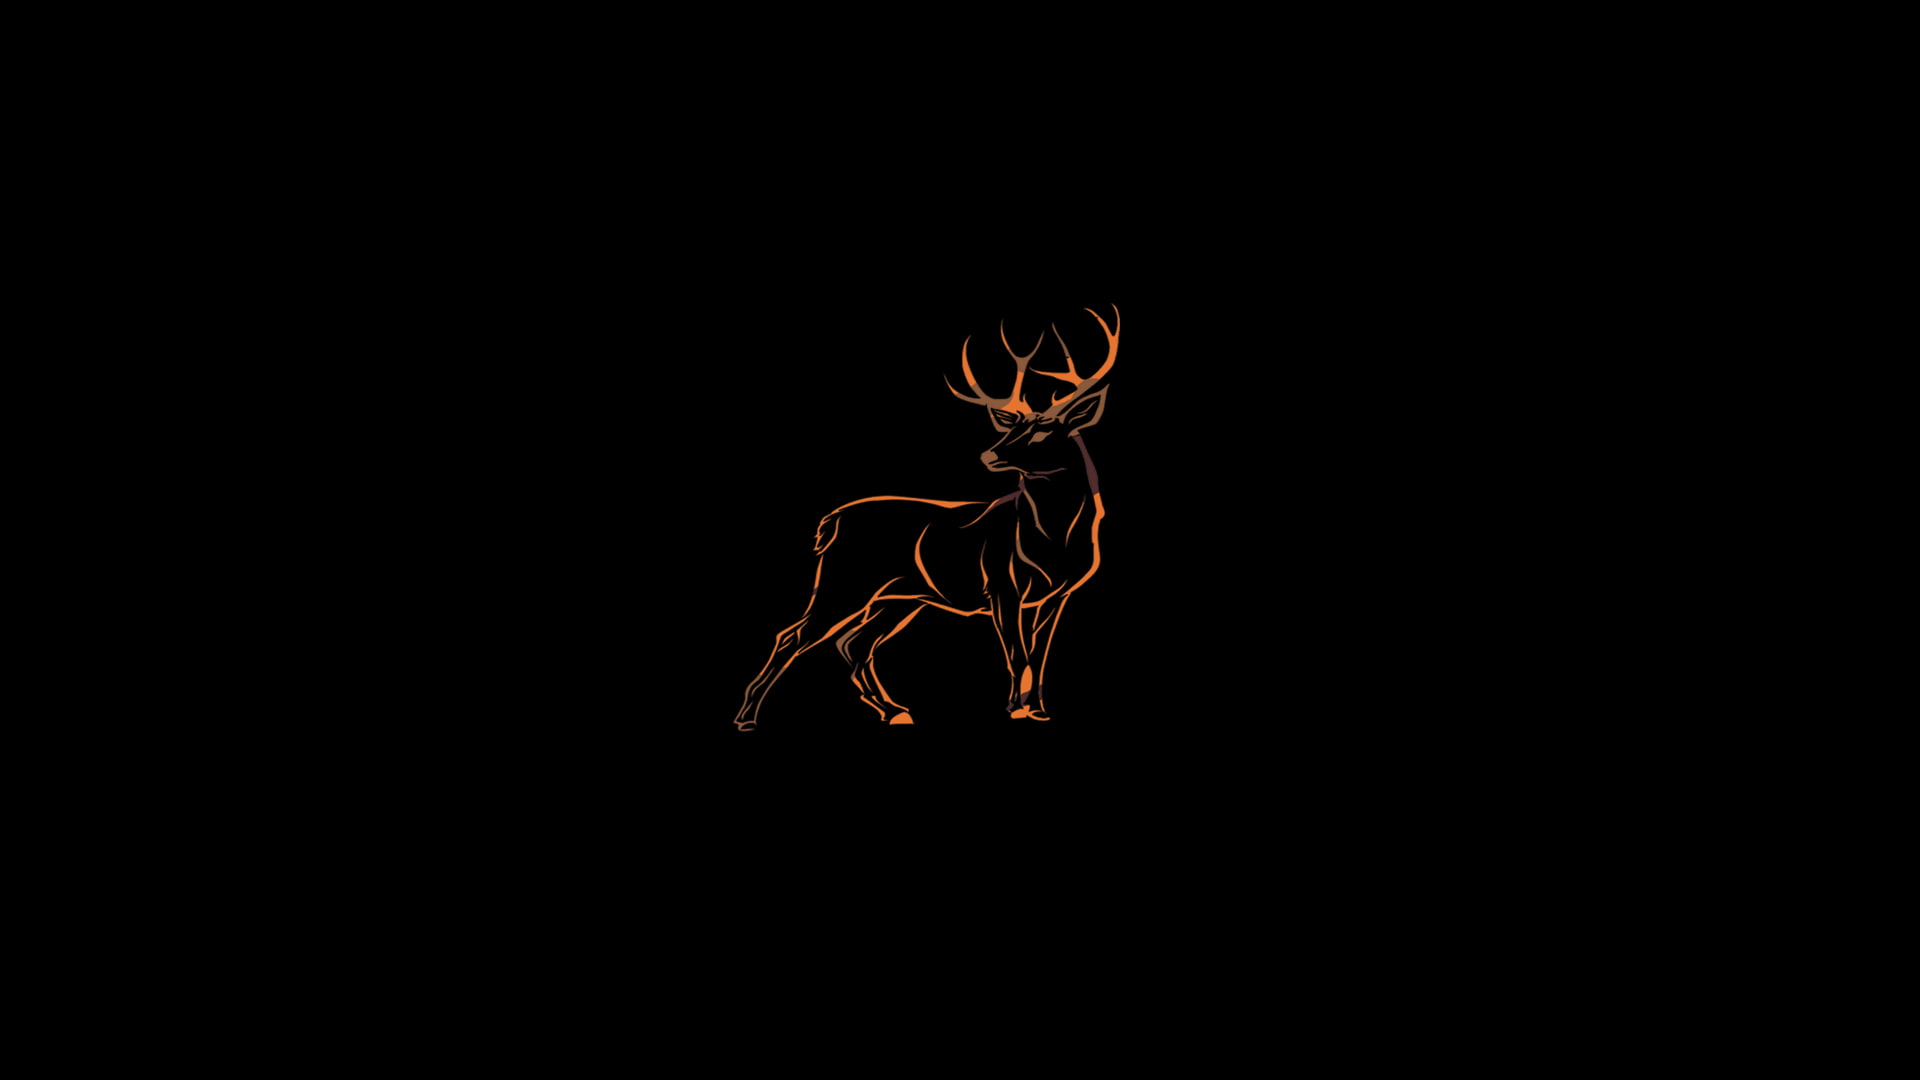 deer, wildlife, copy space, black background, studio shot, illuminated